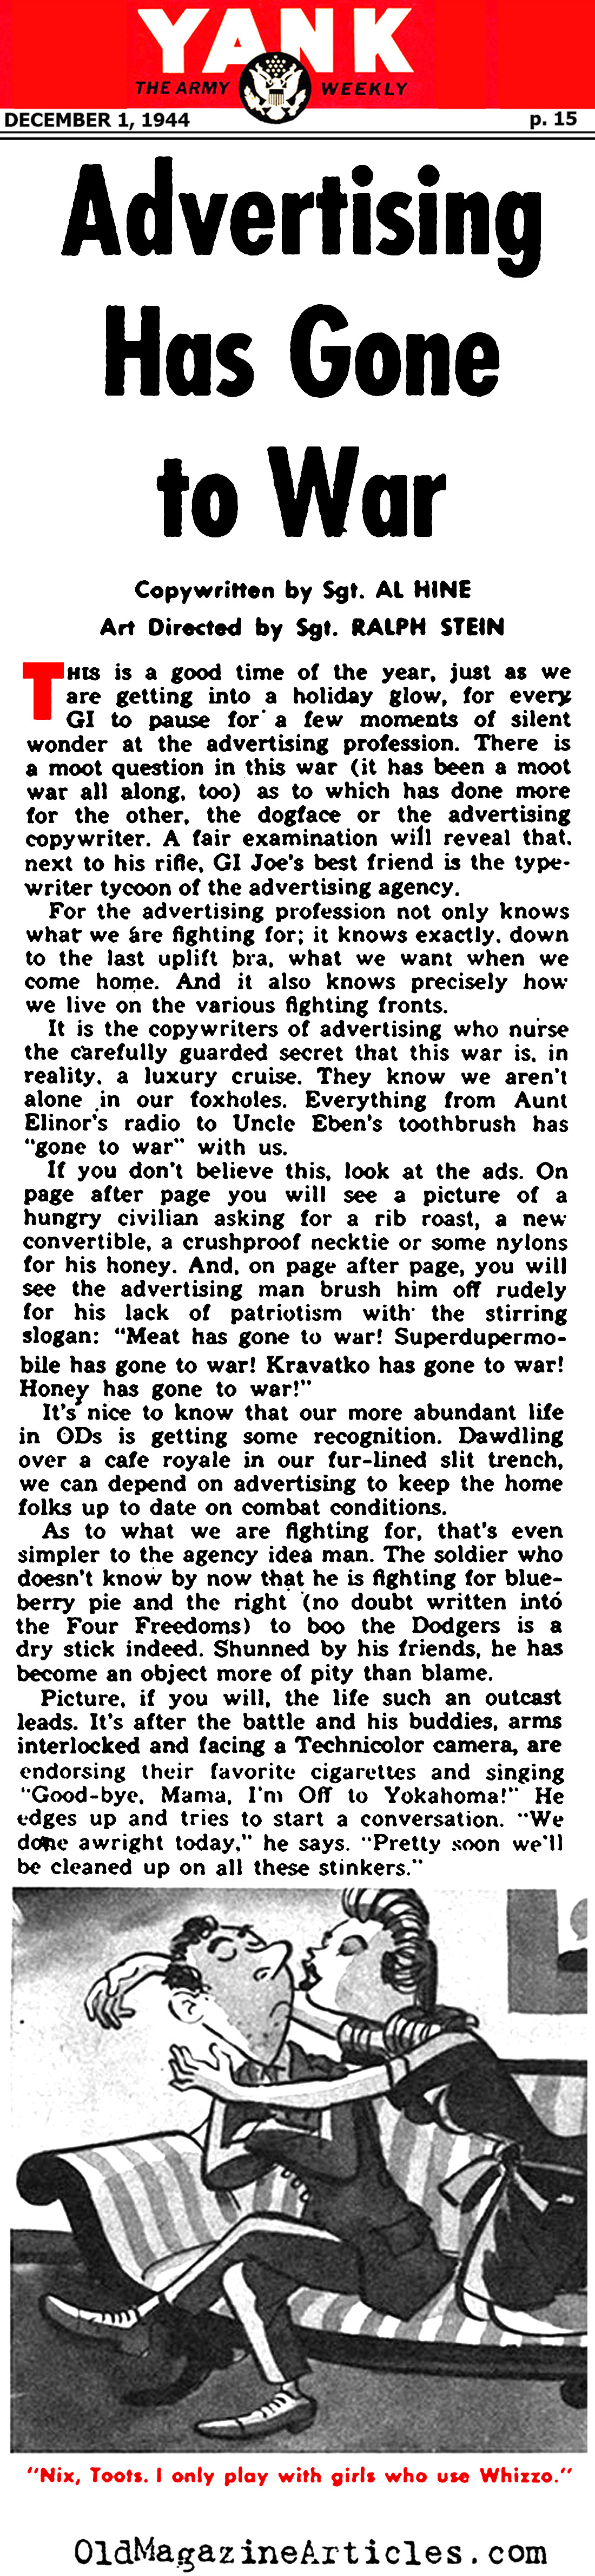 U.S. Advertising During W.W. II (Yank Magazine, 1944)